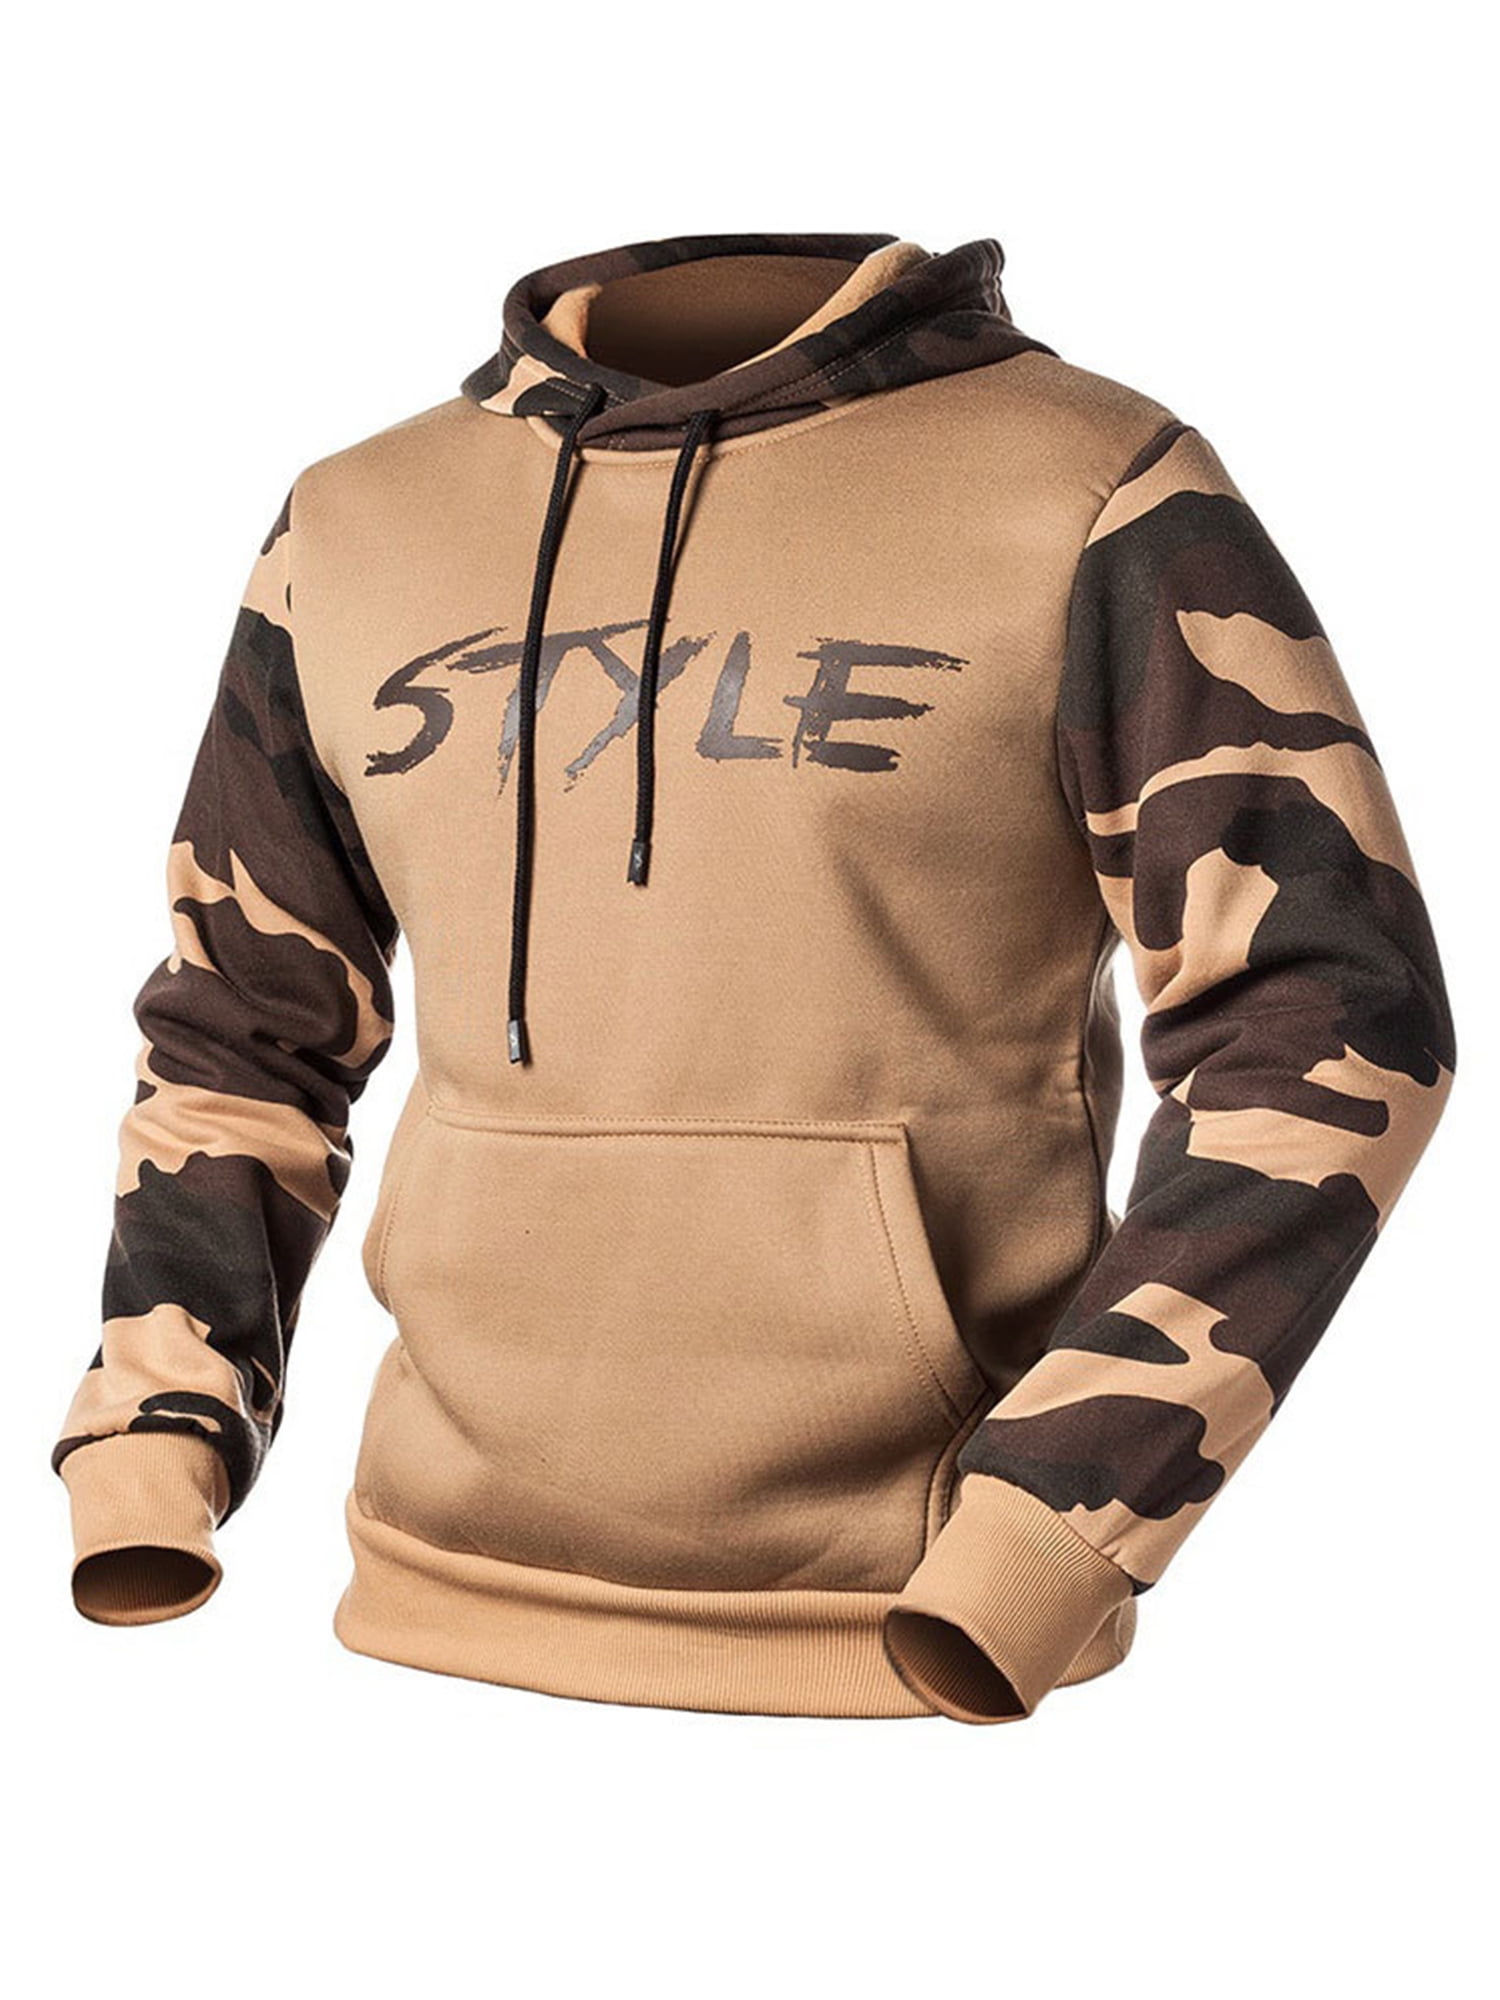 Mens Camouflage Long Sleeve Hoodies Military Zip Up Casual Hooded Sweatshirts T9 